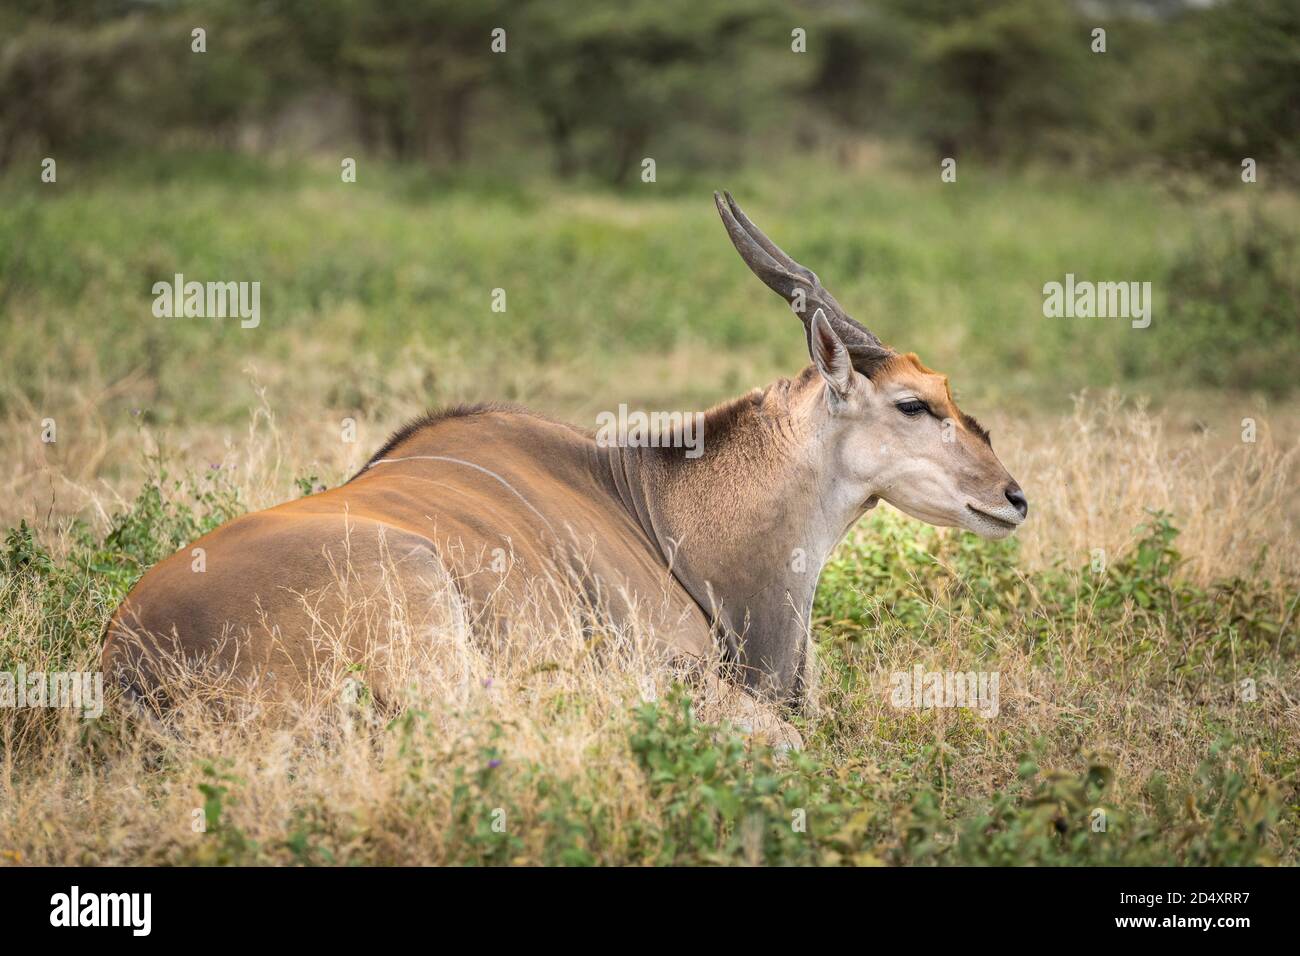 Eland antelope lying in grass with its head up in Ndutu in Tanzania Stock Photo